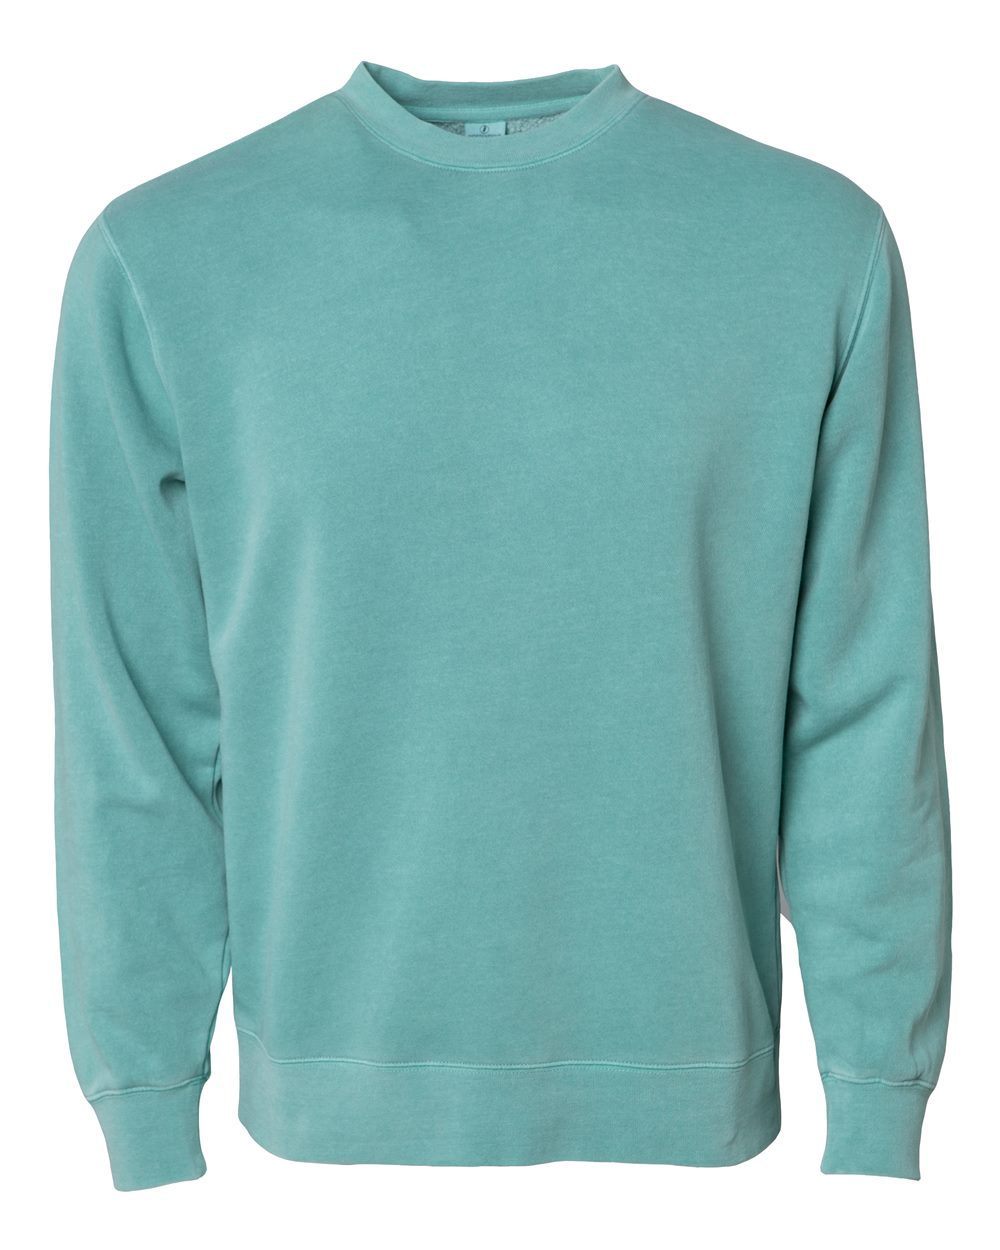 Unisex Pigment-Dyed Crew Sweatshirt (Mint) Sweatshirt S&S 